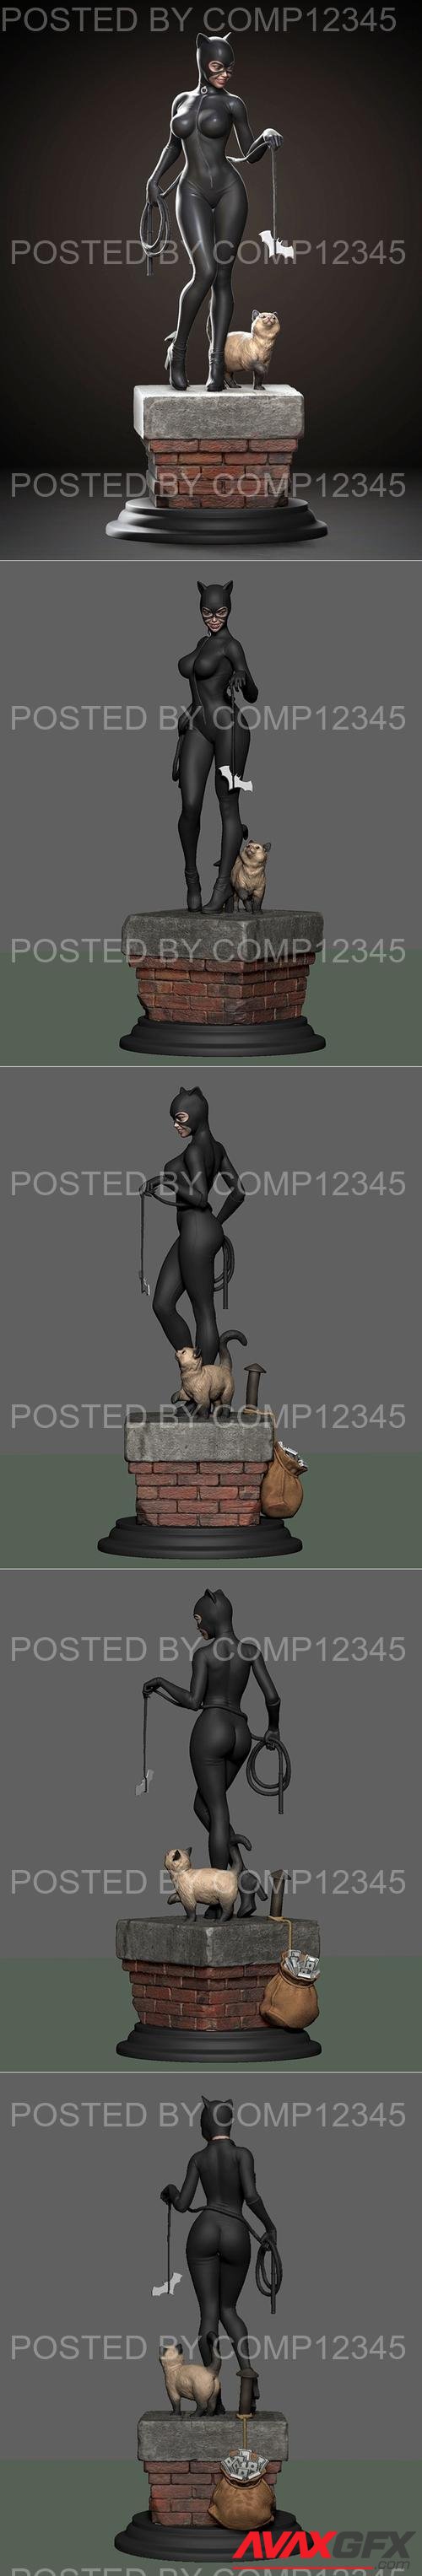 Catwoman 3D Print